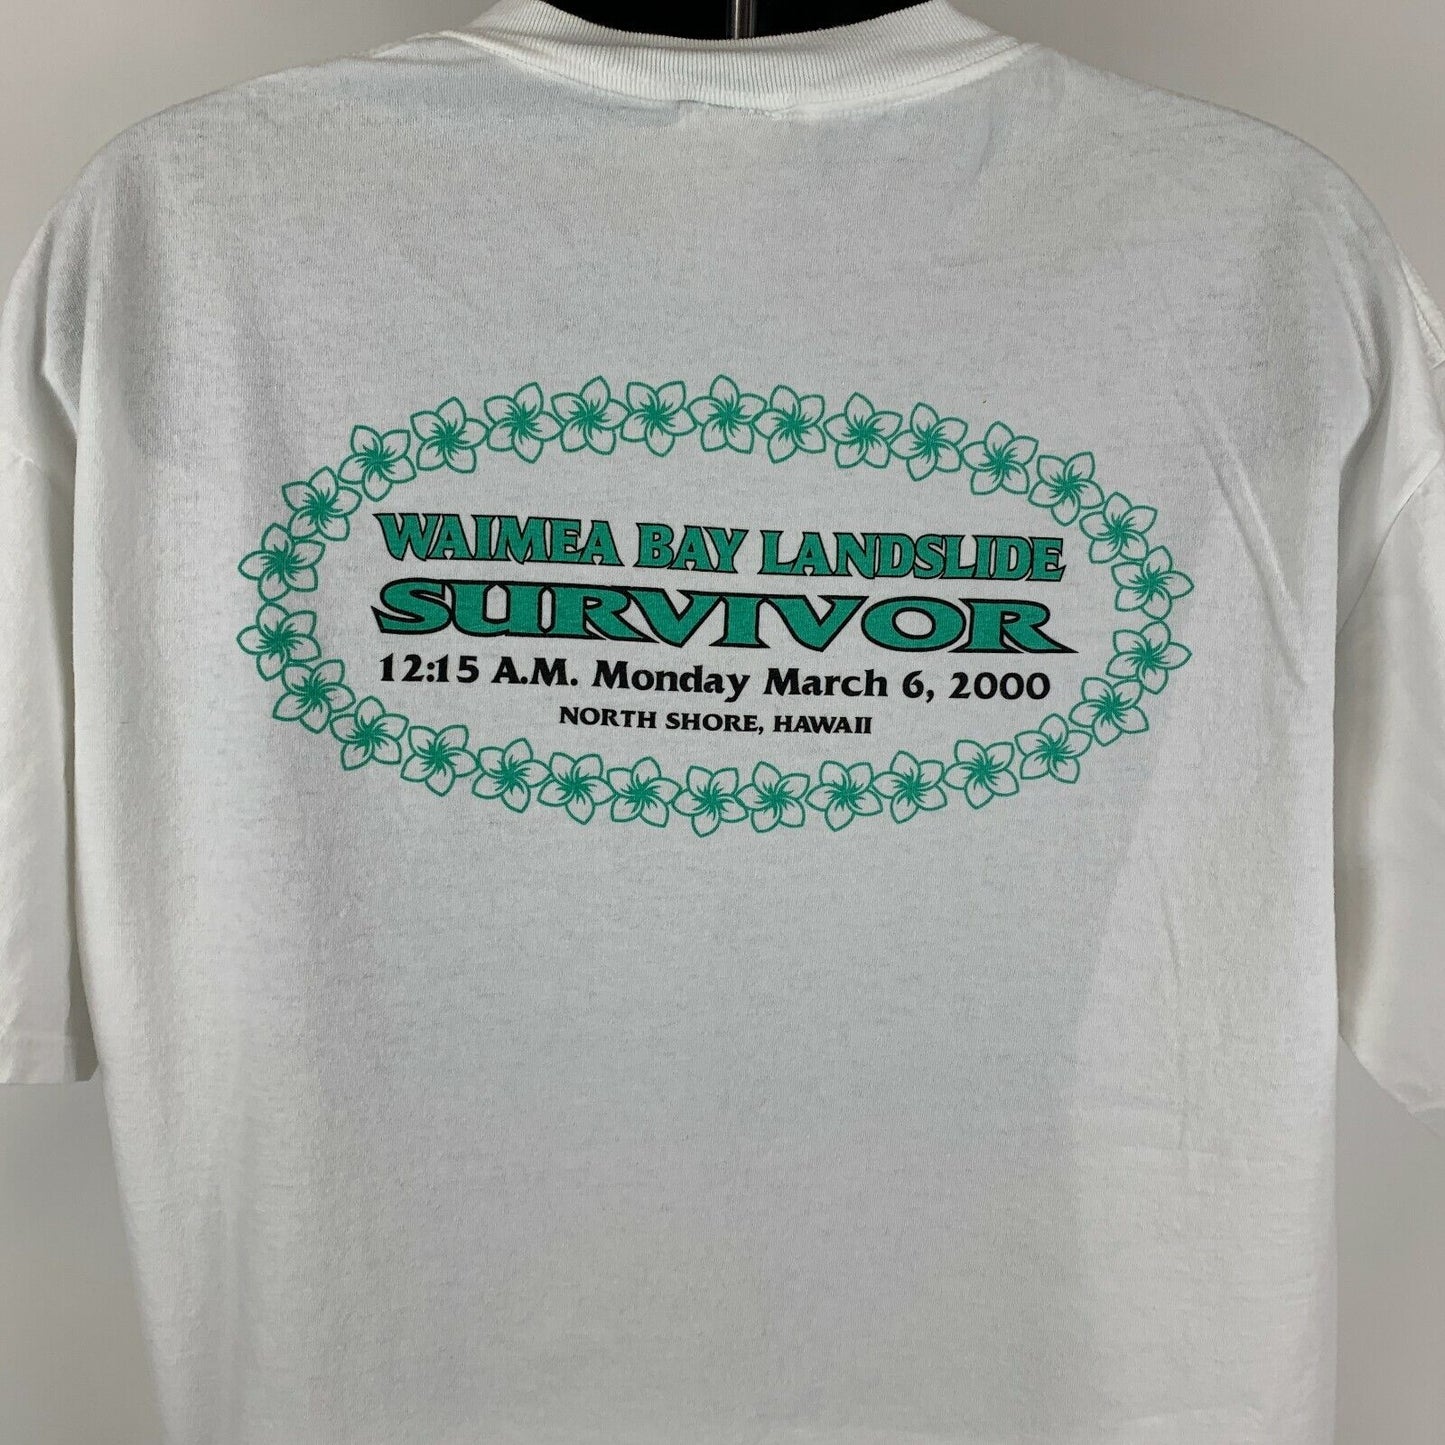 Waimea Bay Landslide Survivor Vintage Y2Ks T Shirt X-Large Hawaii Tee Mens White